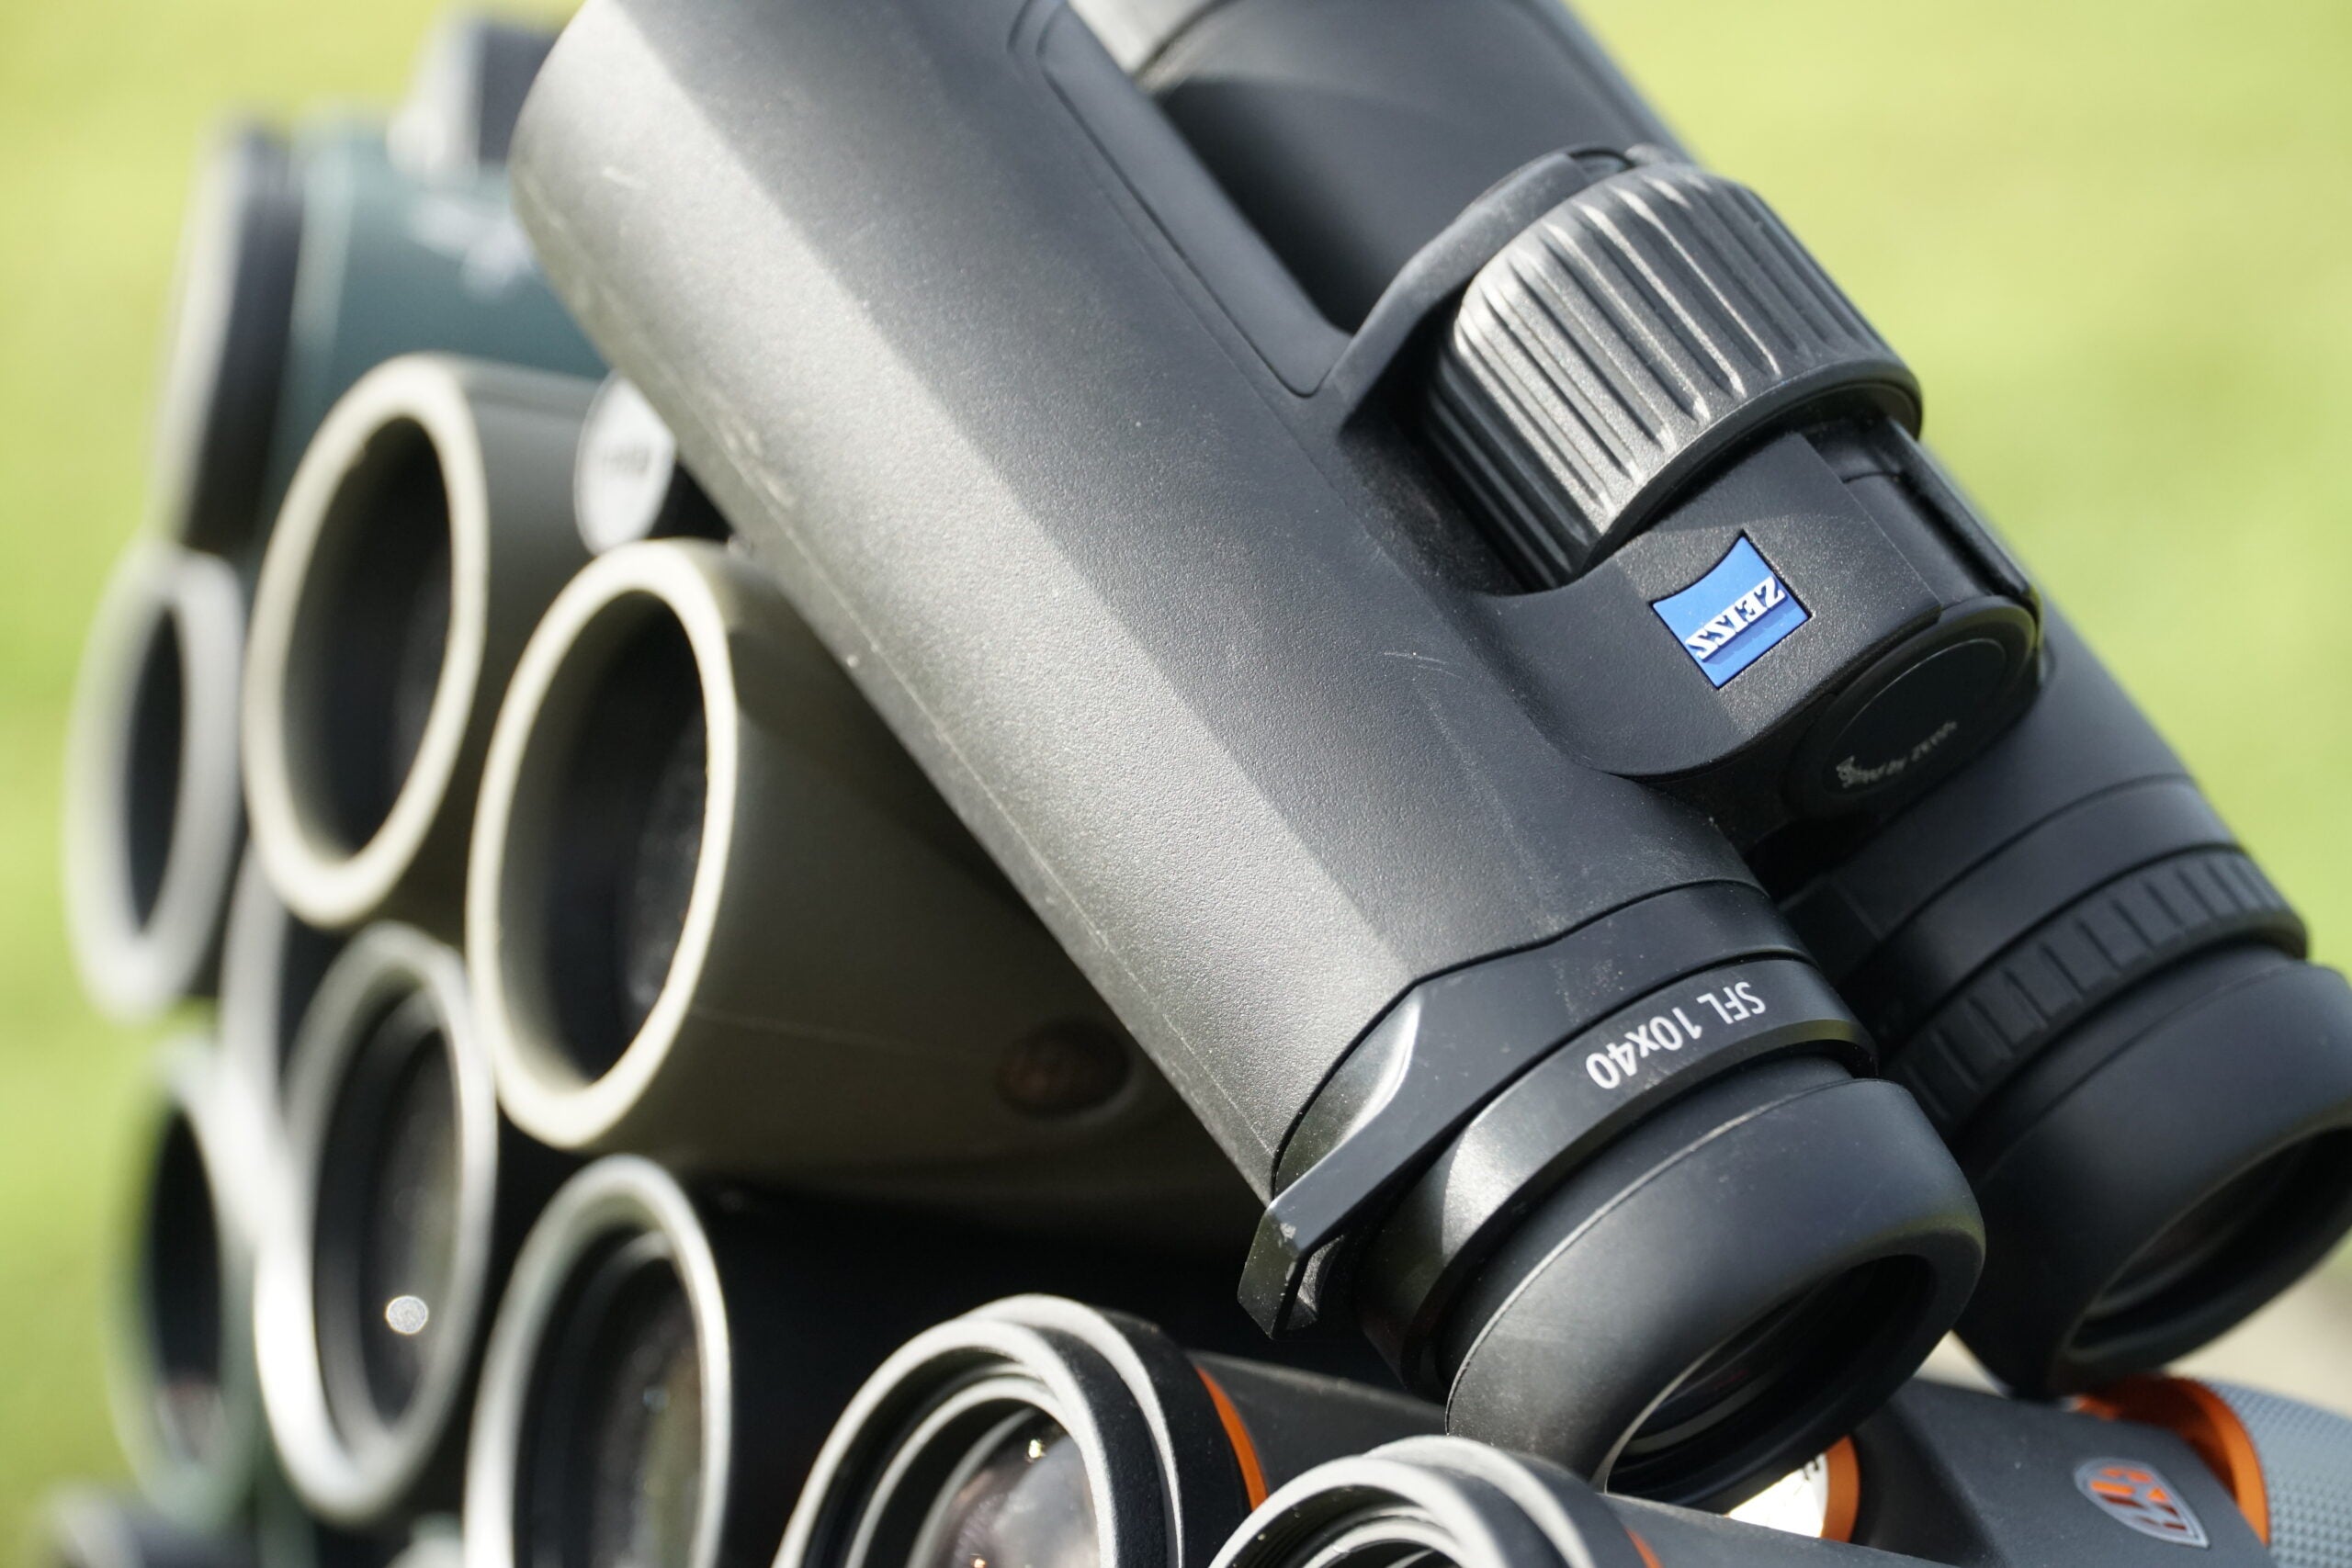 Zeiss SFL 10x40 binocular resting on a stack of other binoculars.